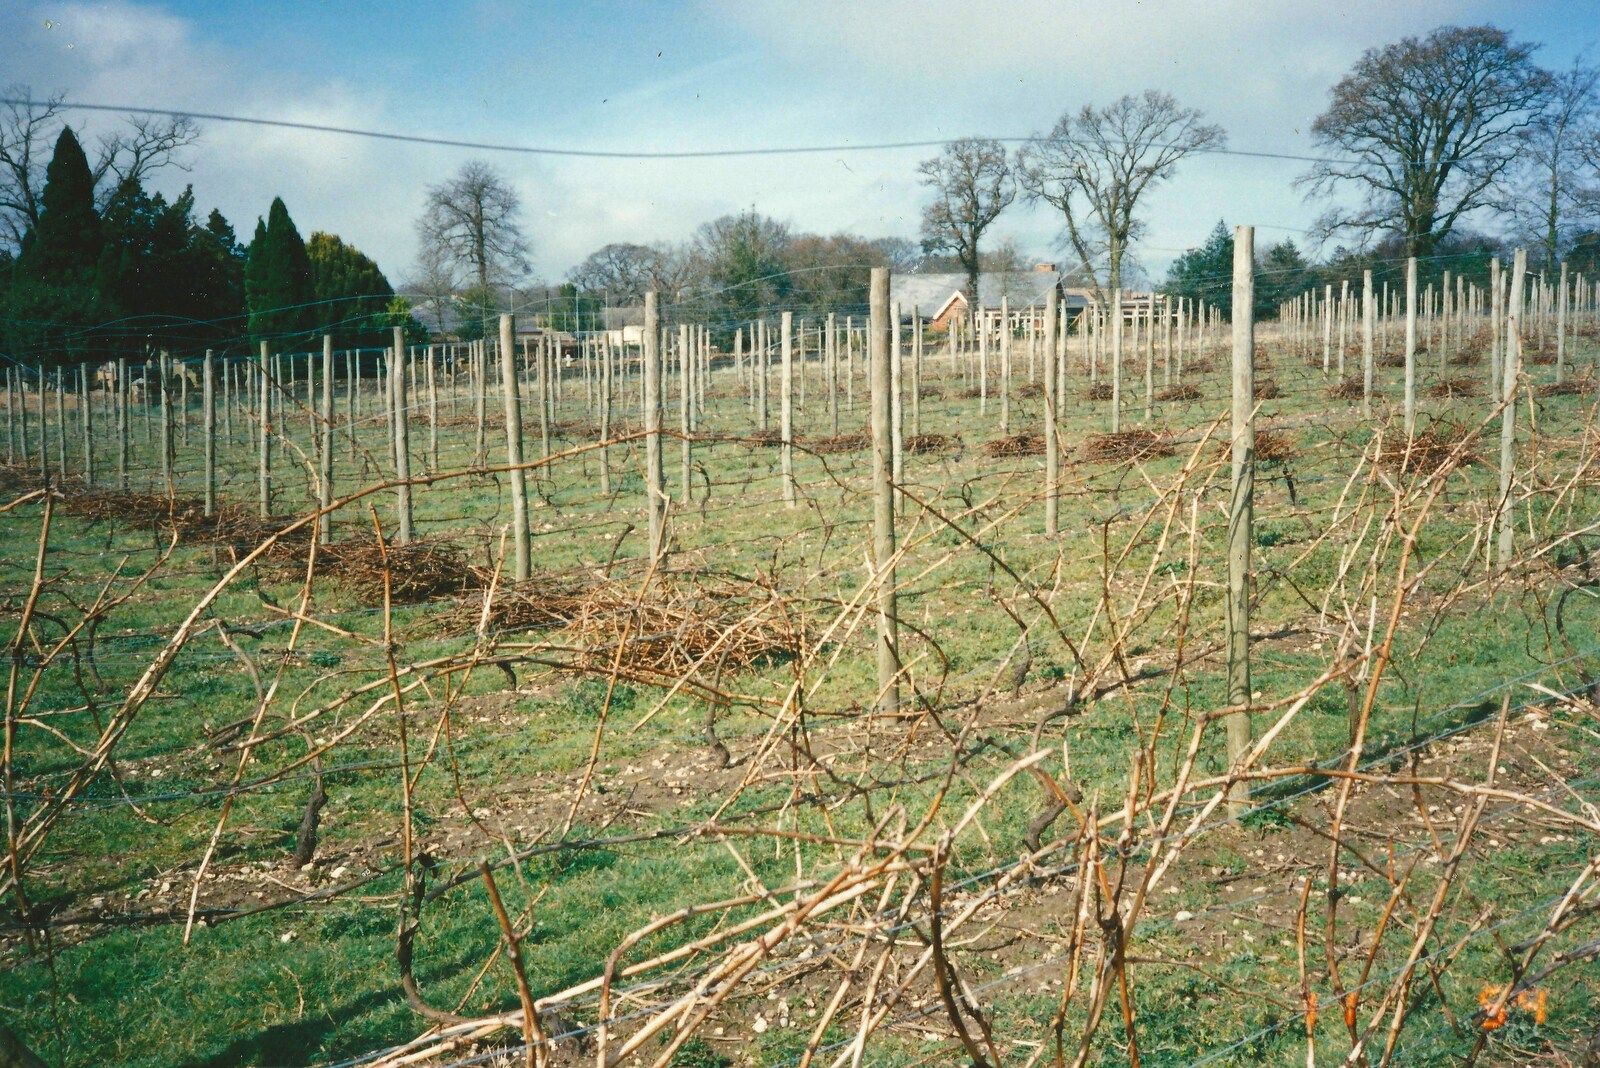 The vineyard after a winter pruning from Constructing a Vineyard, Harrow Road, Bransgore, Dorset - 1st September 1981